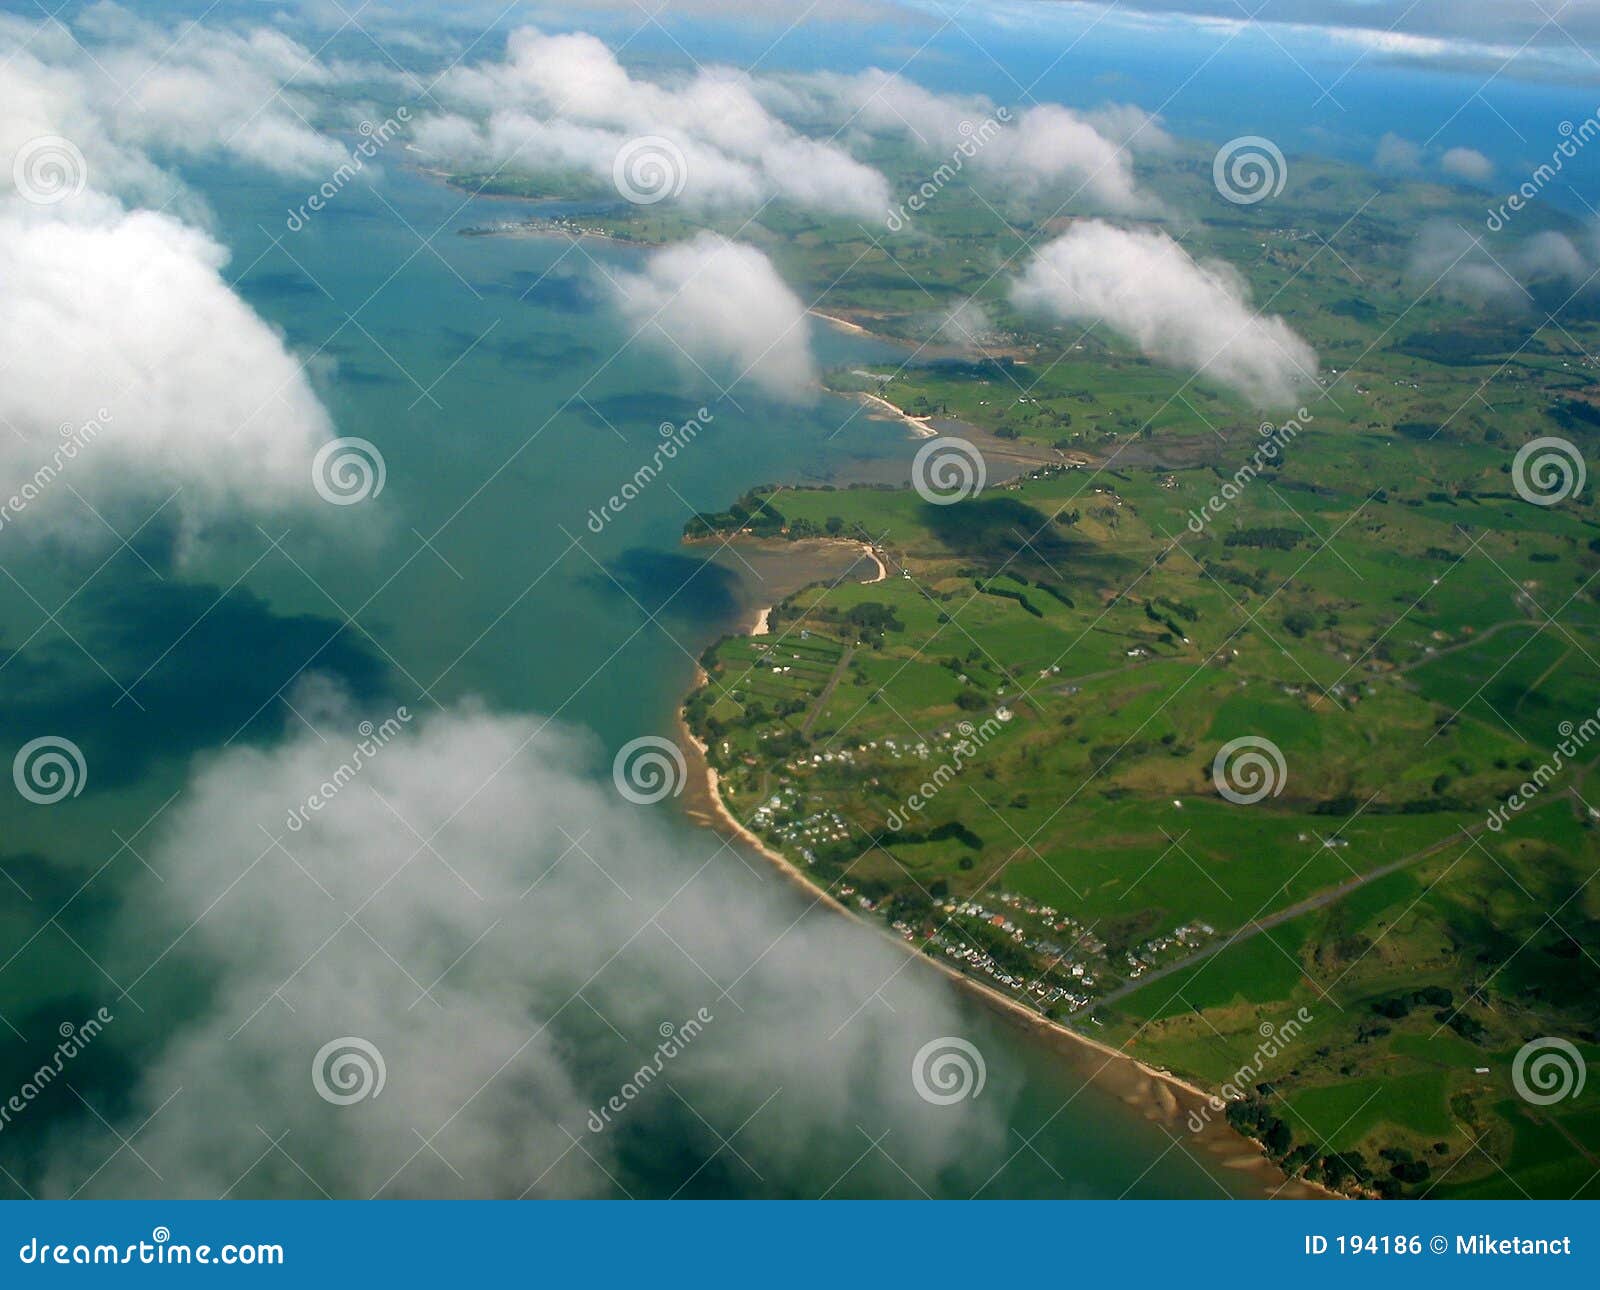 Aerial View of Coastline